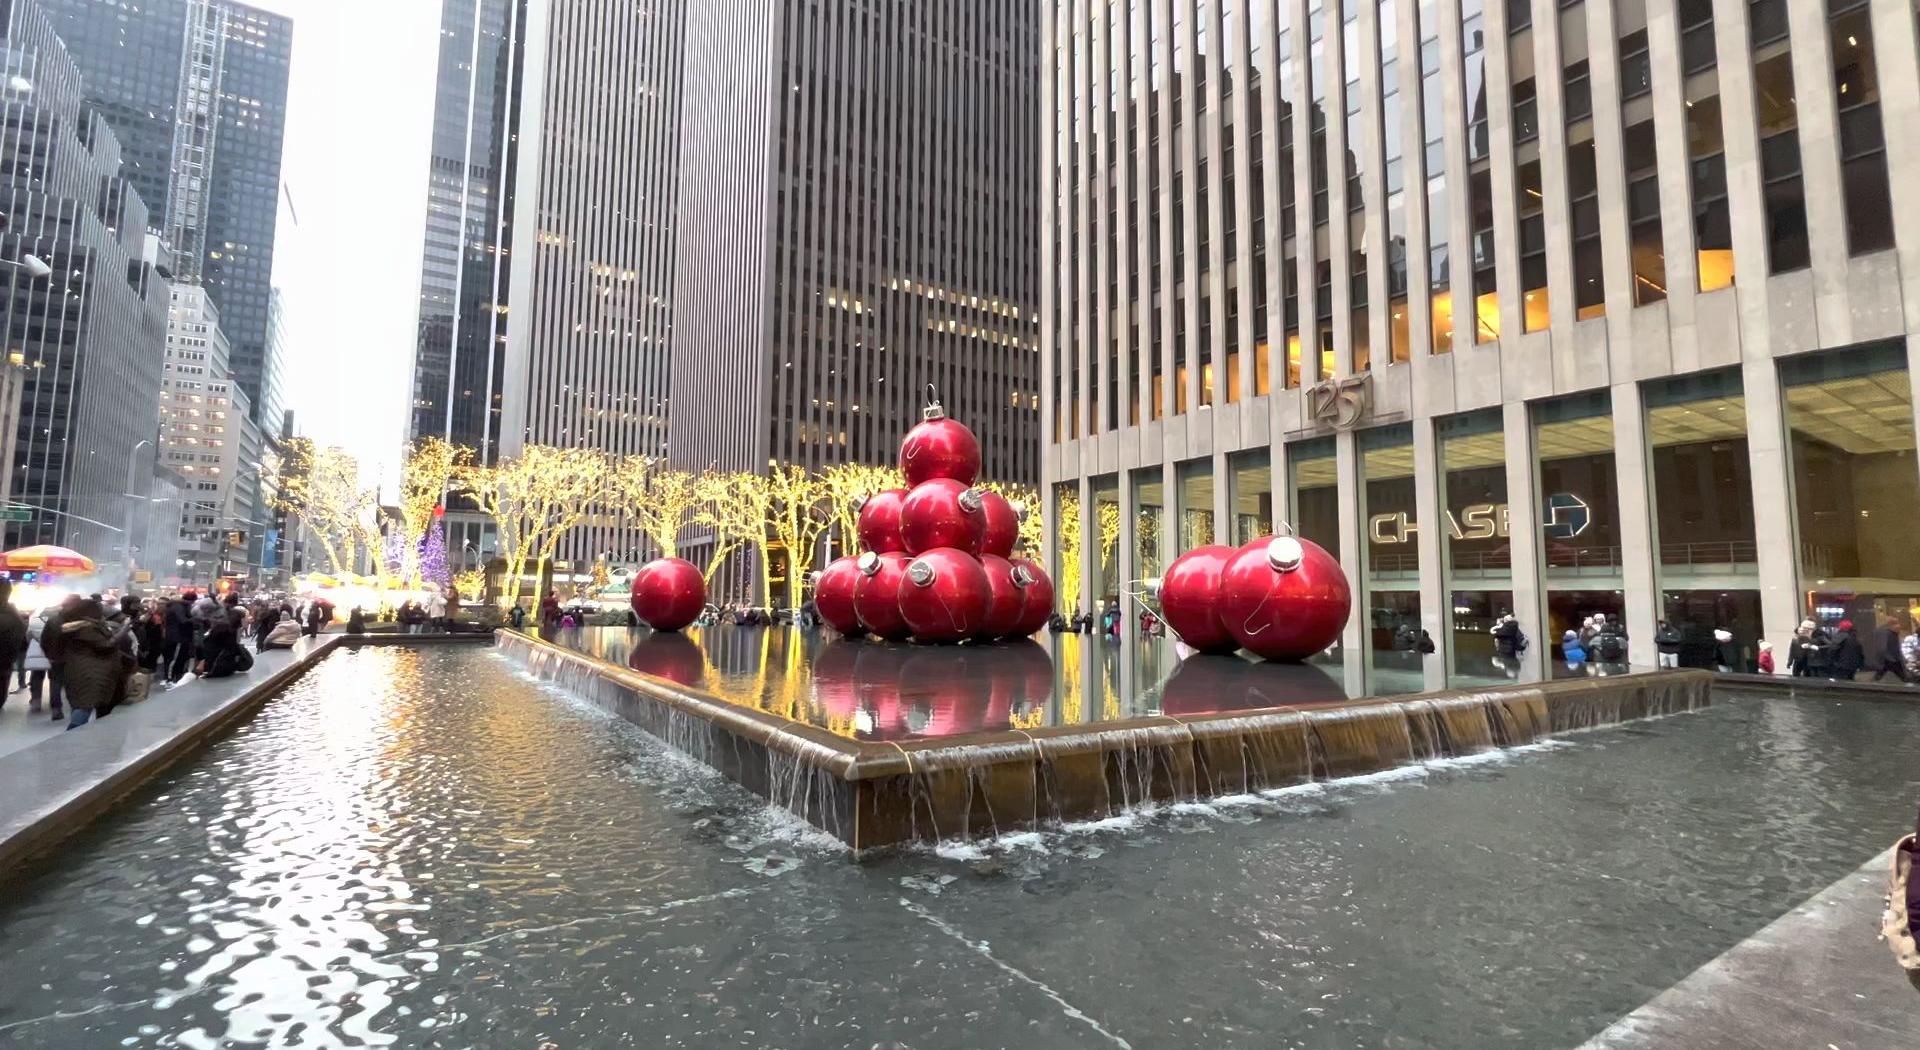 Gigantische rode ornamenten